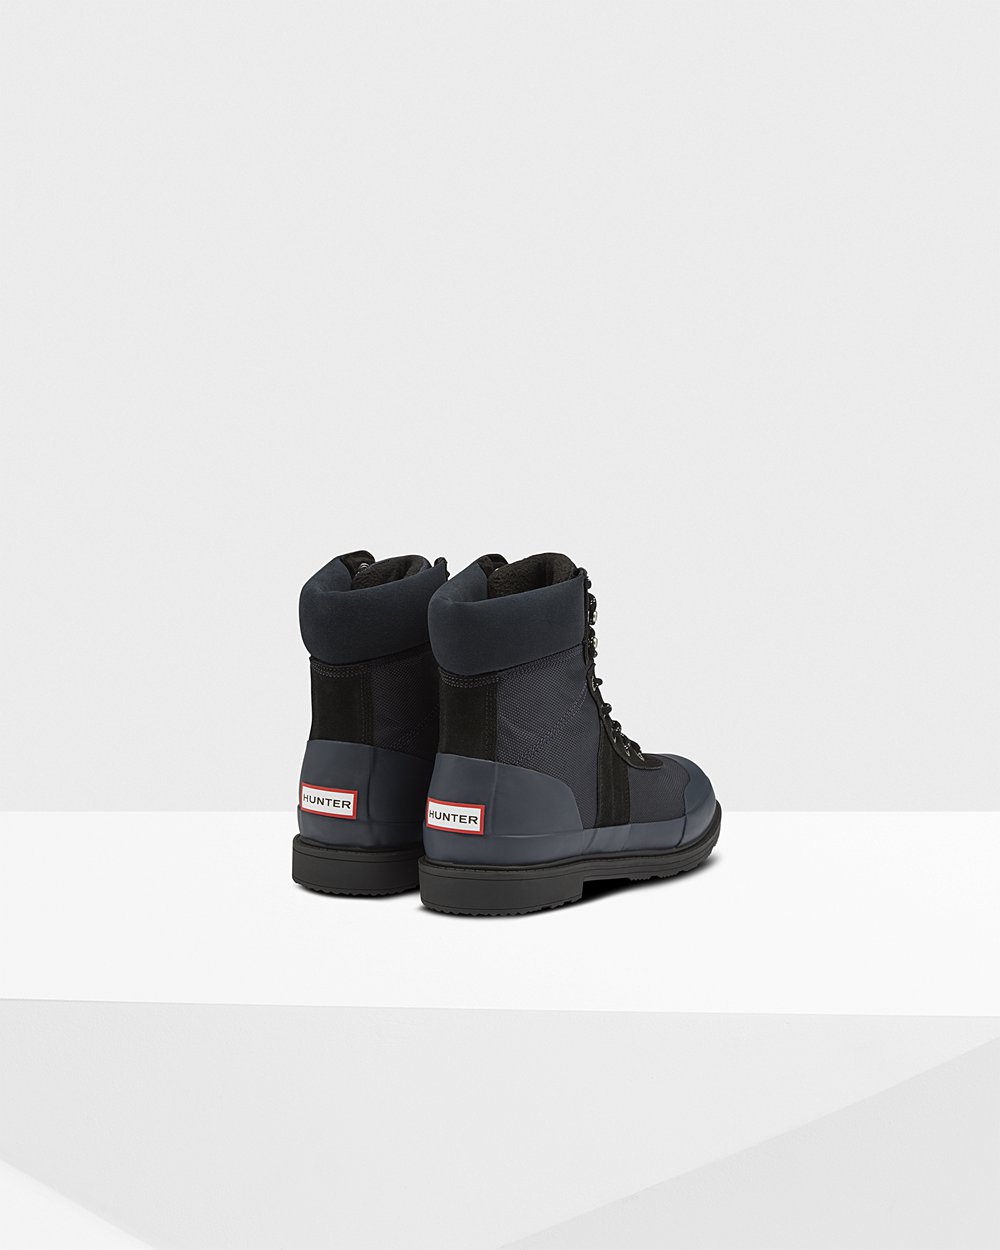 Mens Ankle Boots - Hunter Original Insulated (64OLEYCAJ) - Navy/Black